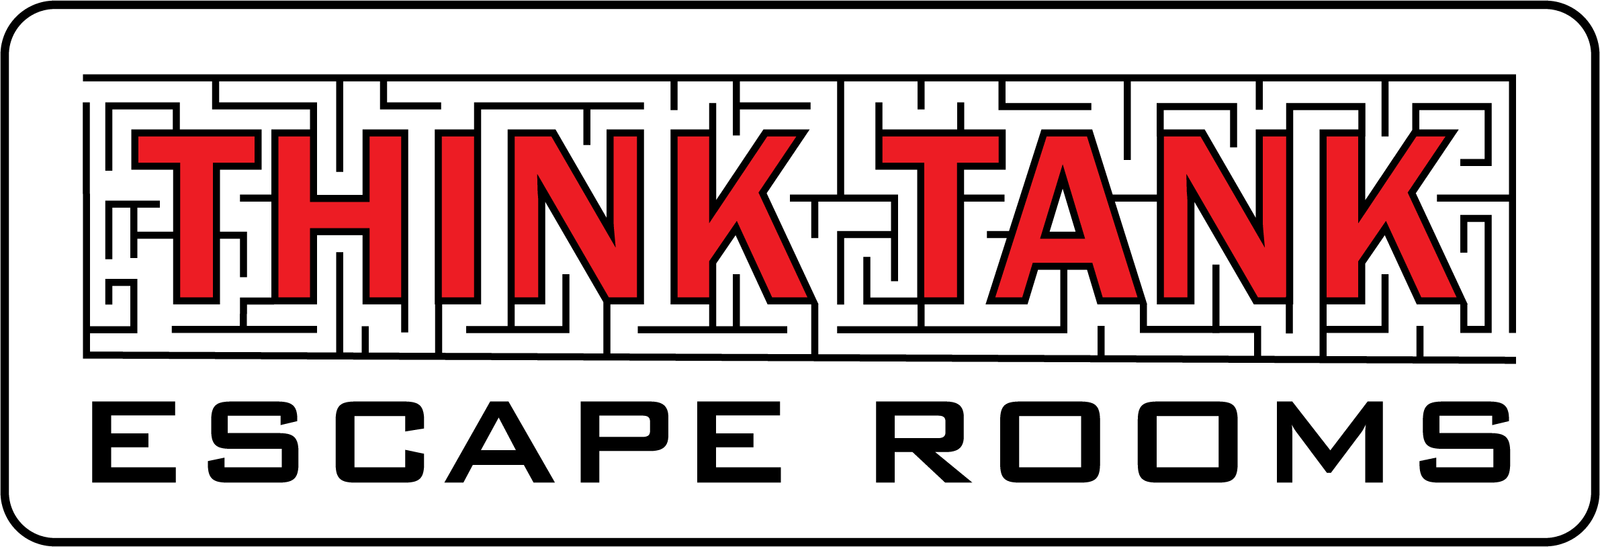 Think Tank Escape Rooms